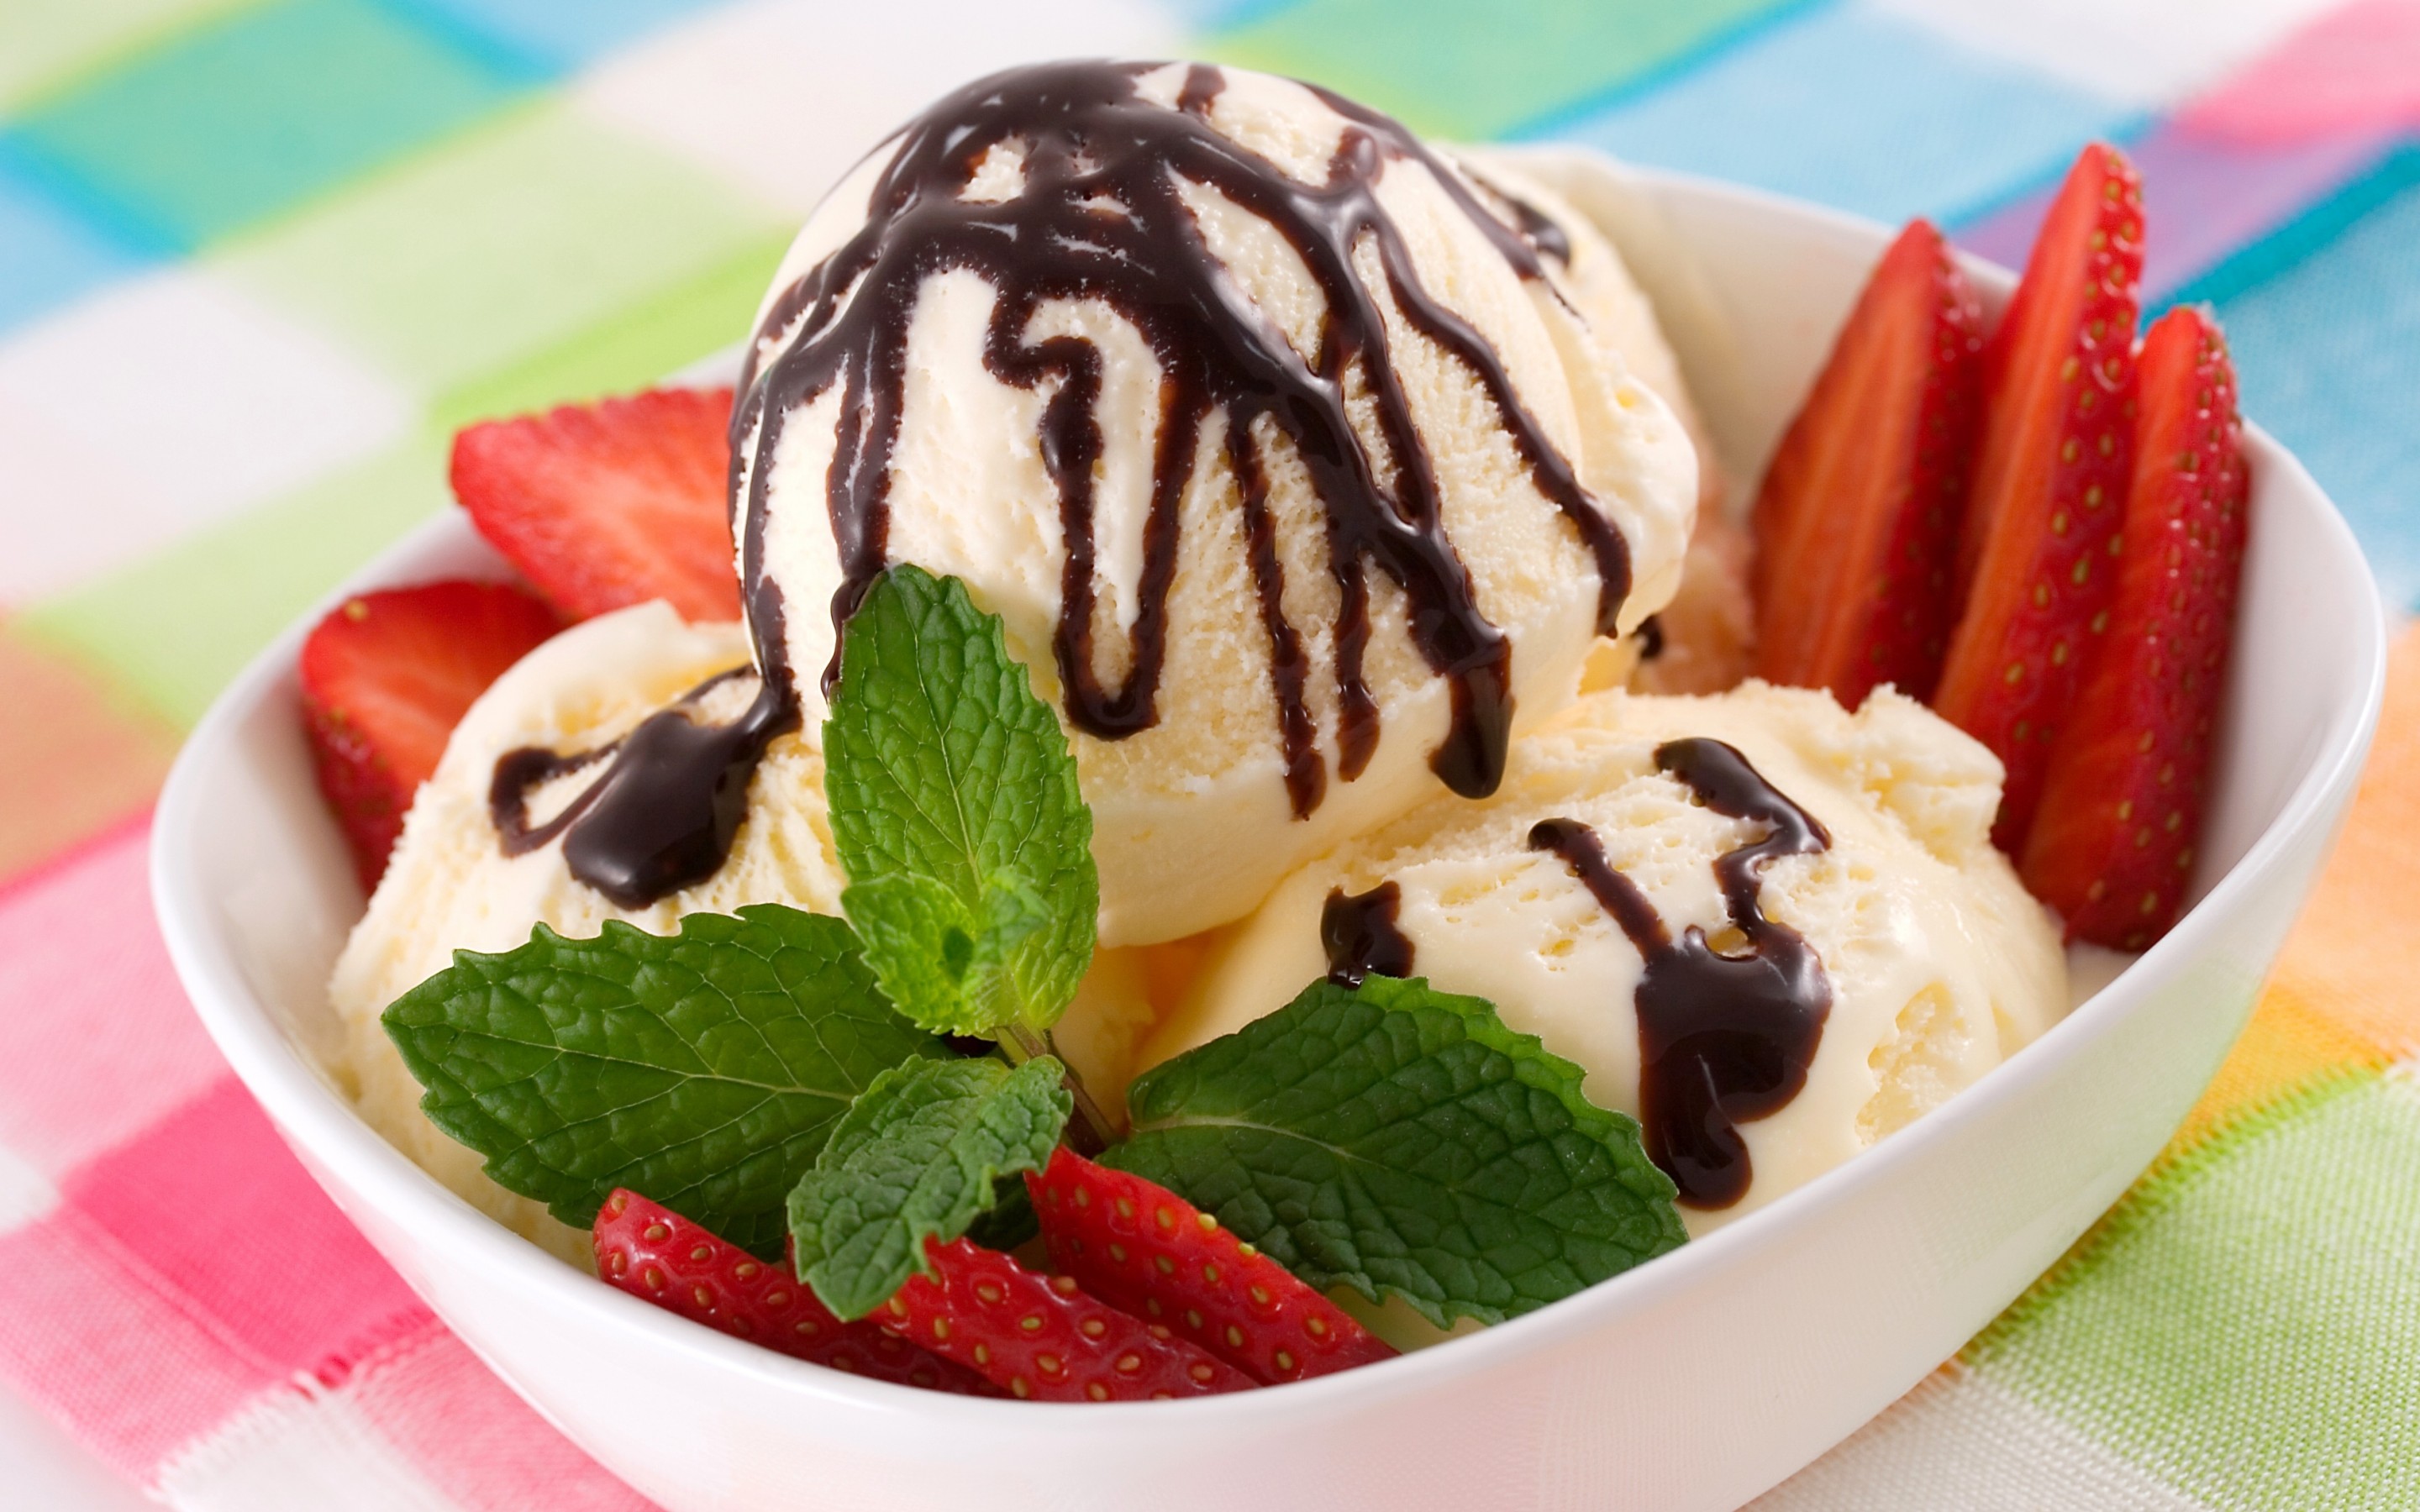 Vanilla Ice Cream With Chocolate And Strawberries - HD Wallpaper 